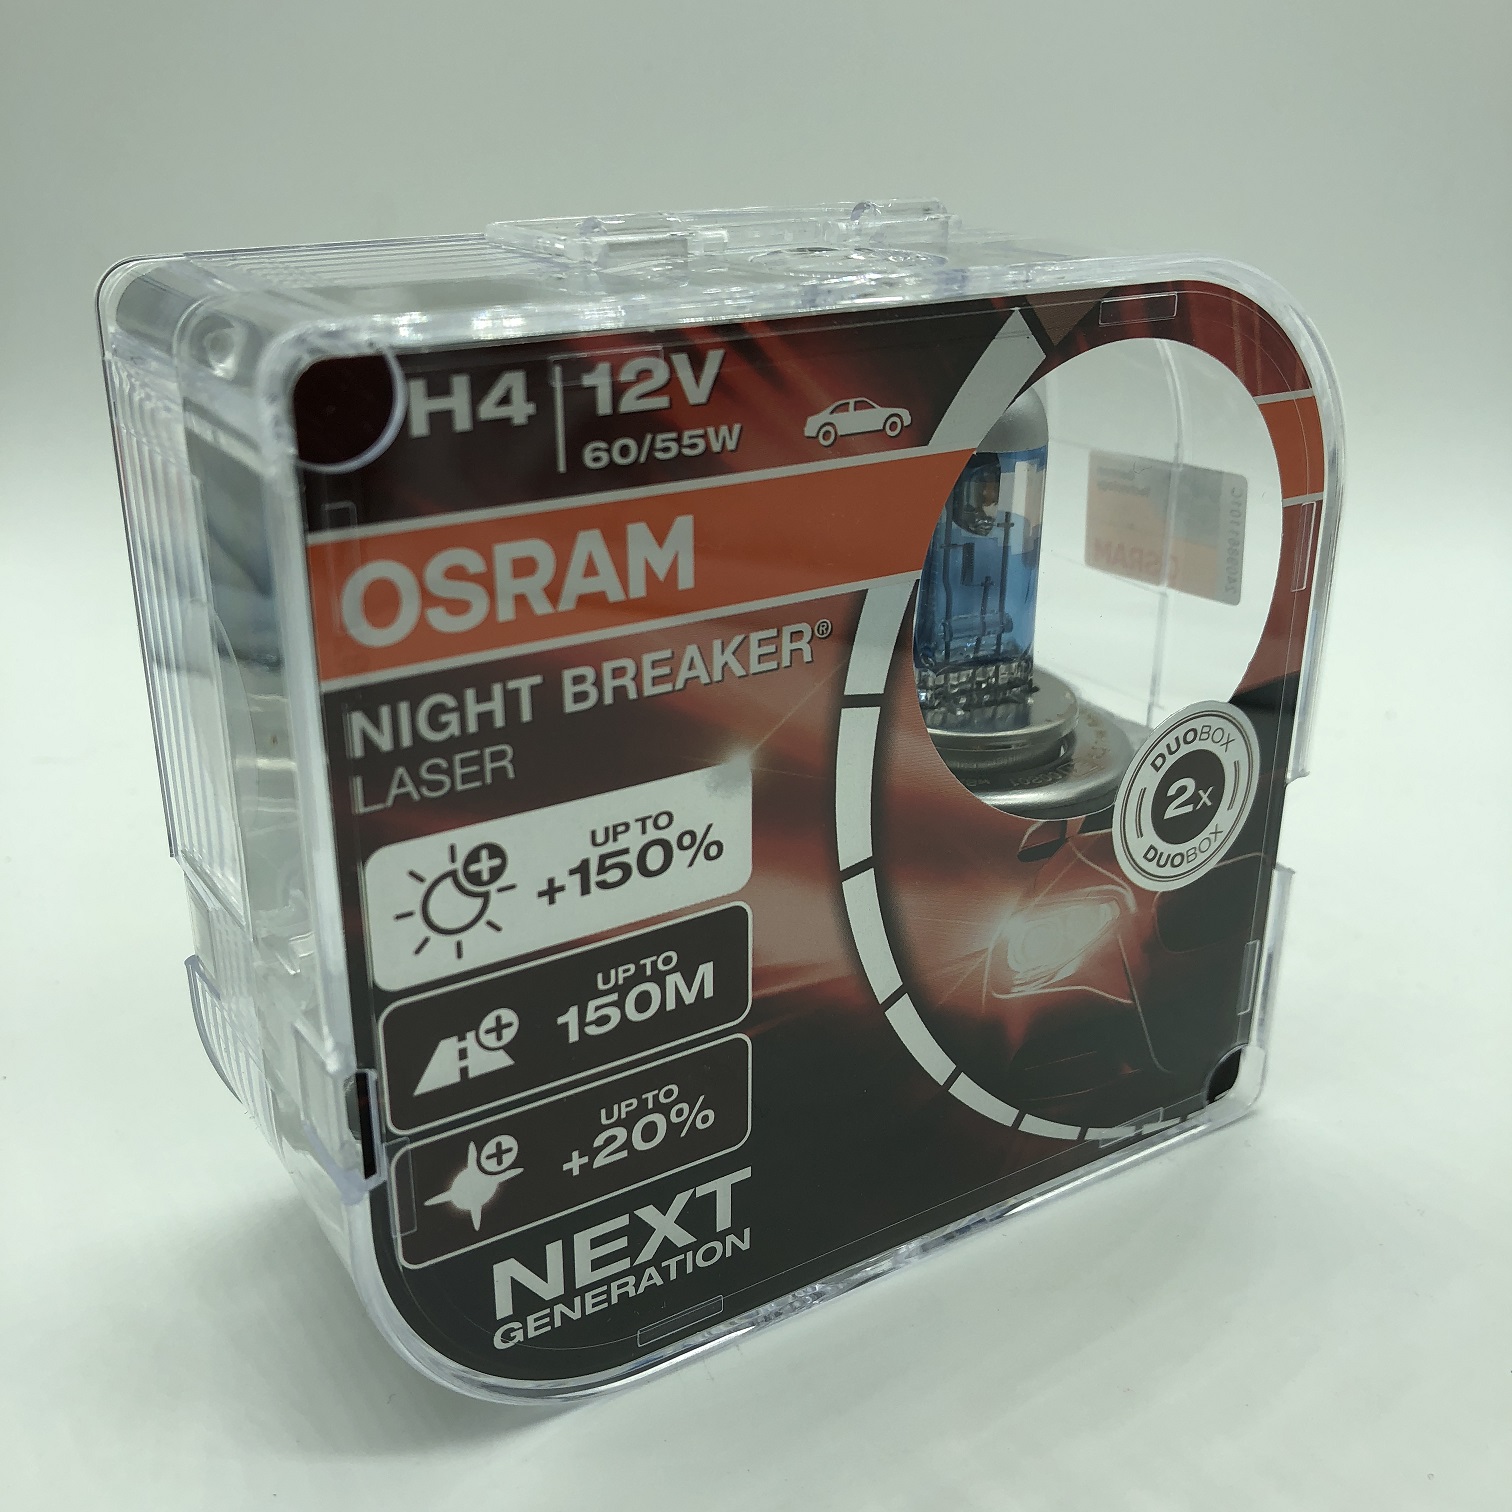 Osram Night Breacker LASER 150% mehr Licht 2er Set-Osram Night Breaker Laser